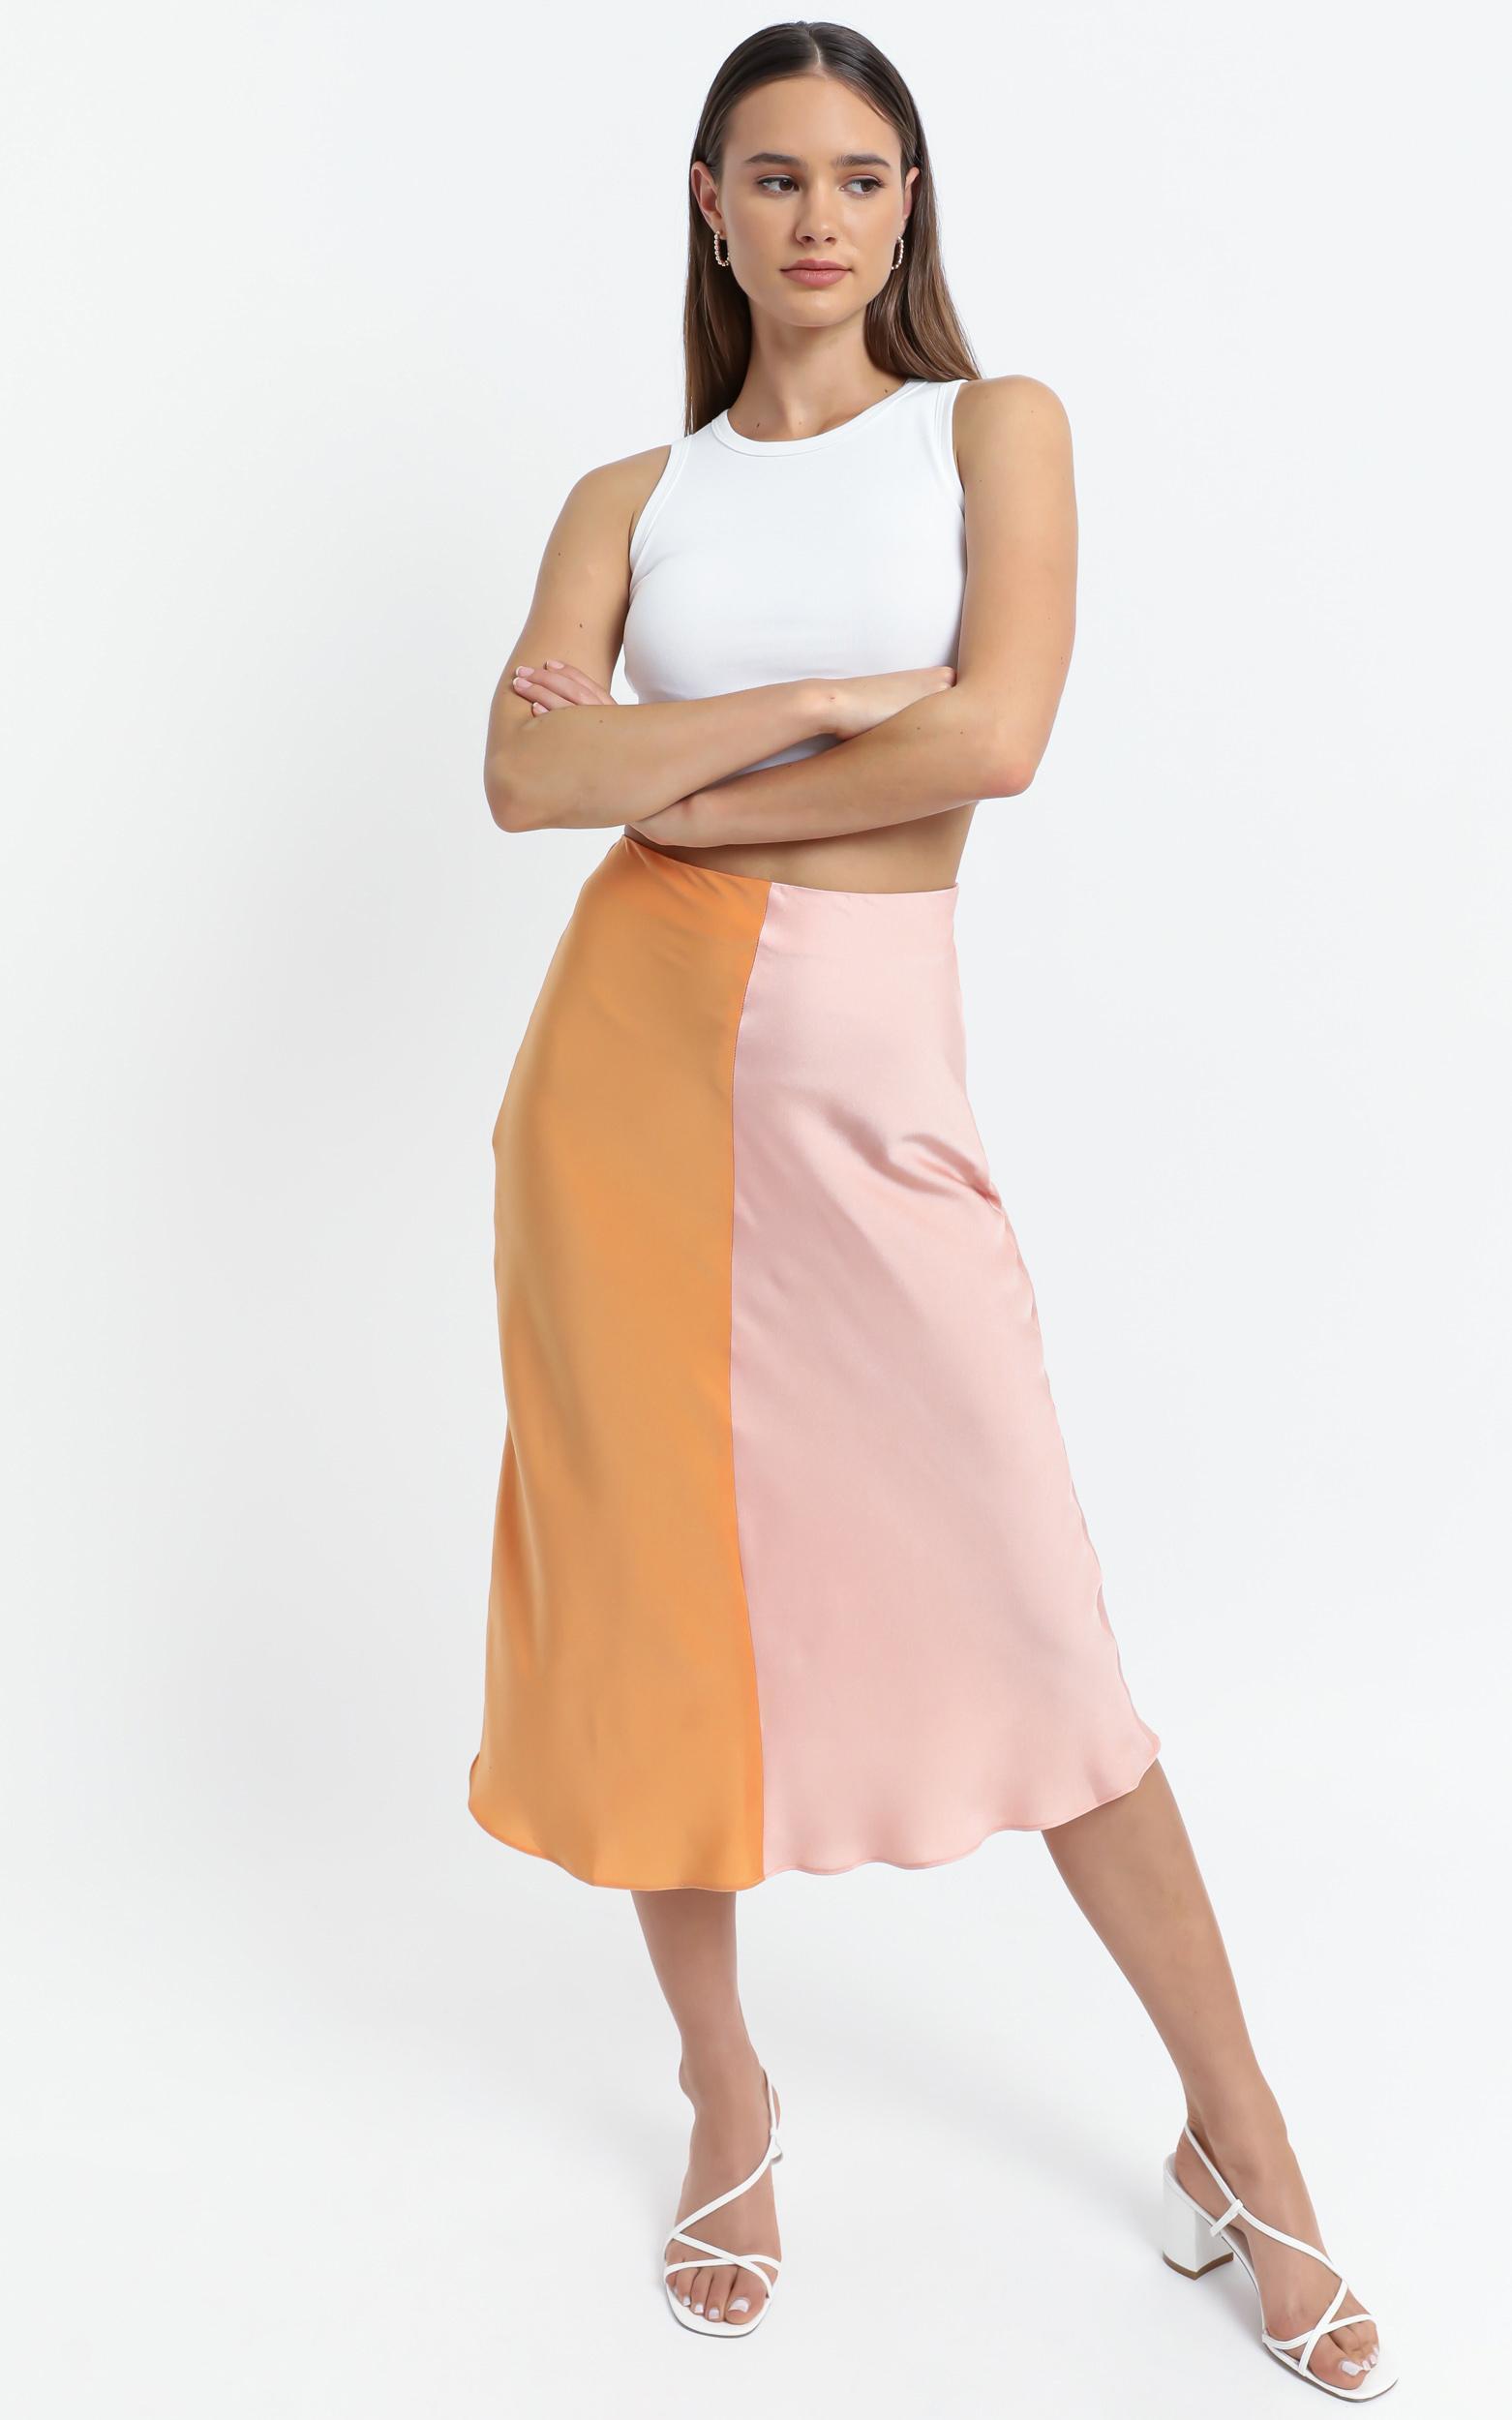 Addington Skirt in Pink and Orange - 6 (XS), Pink, hi-res image number null